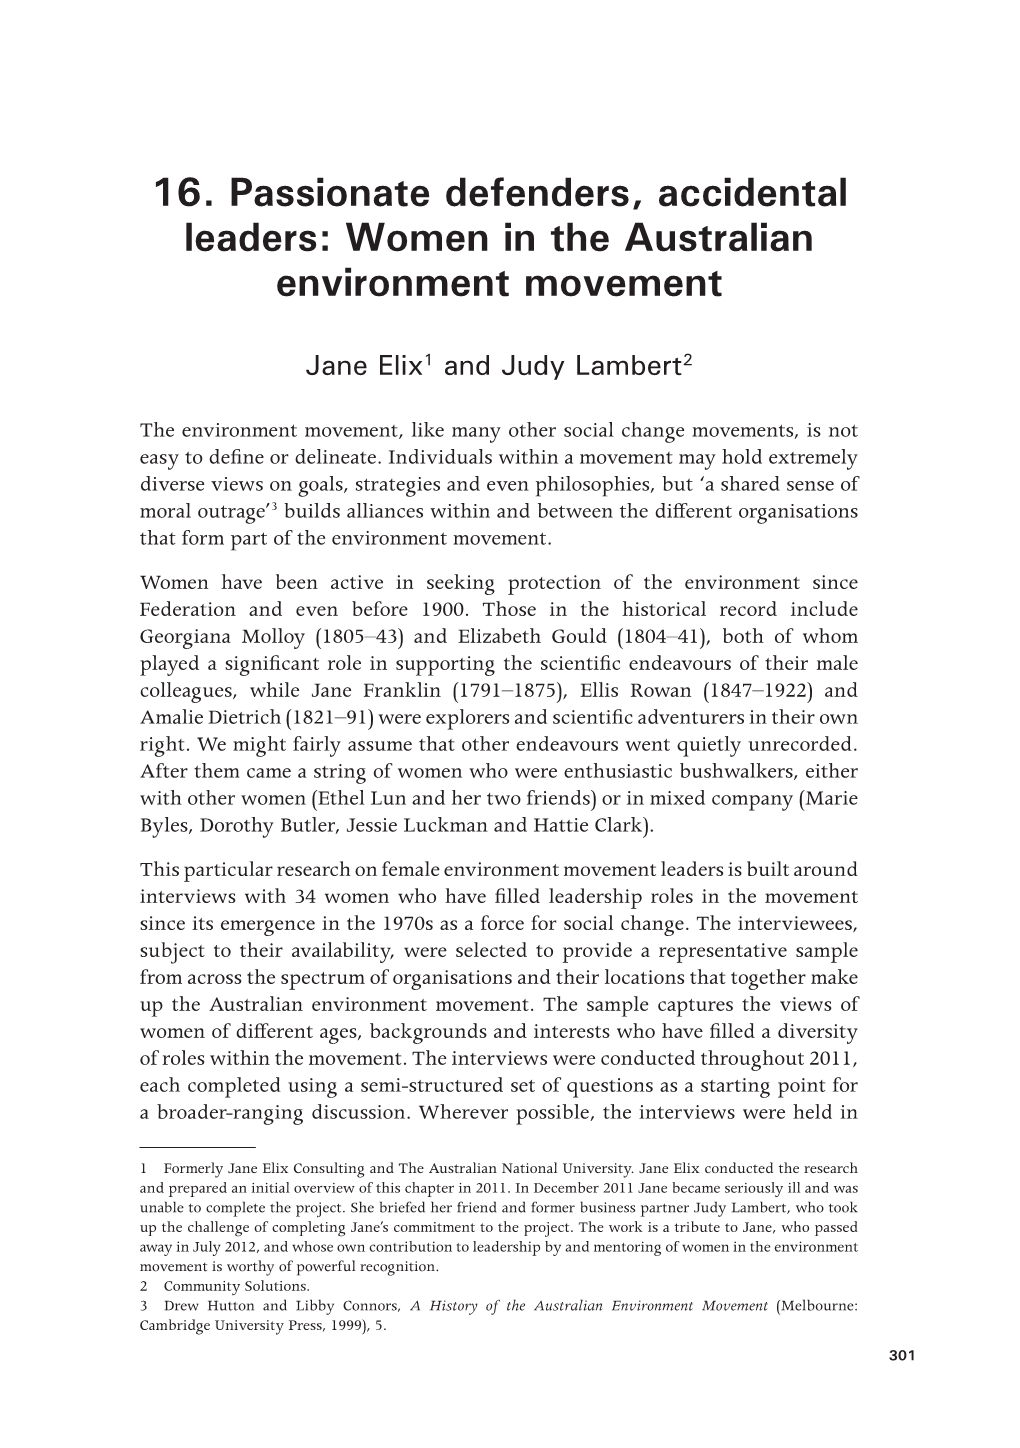 Women in the Australian Environment Movement